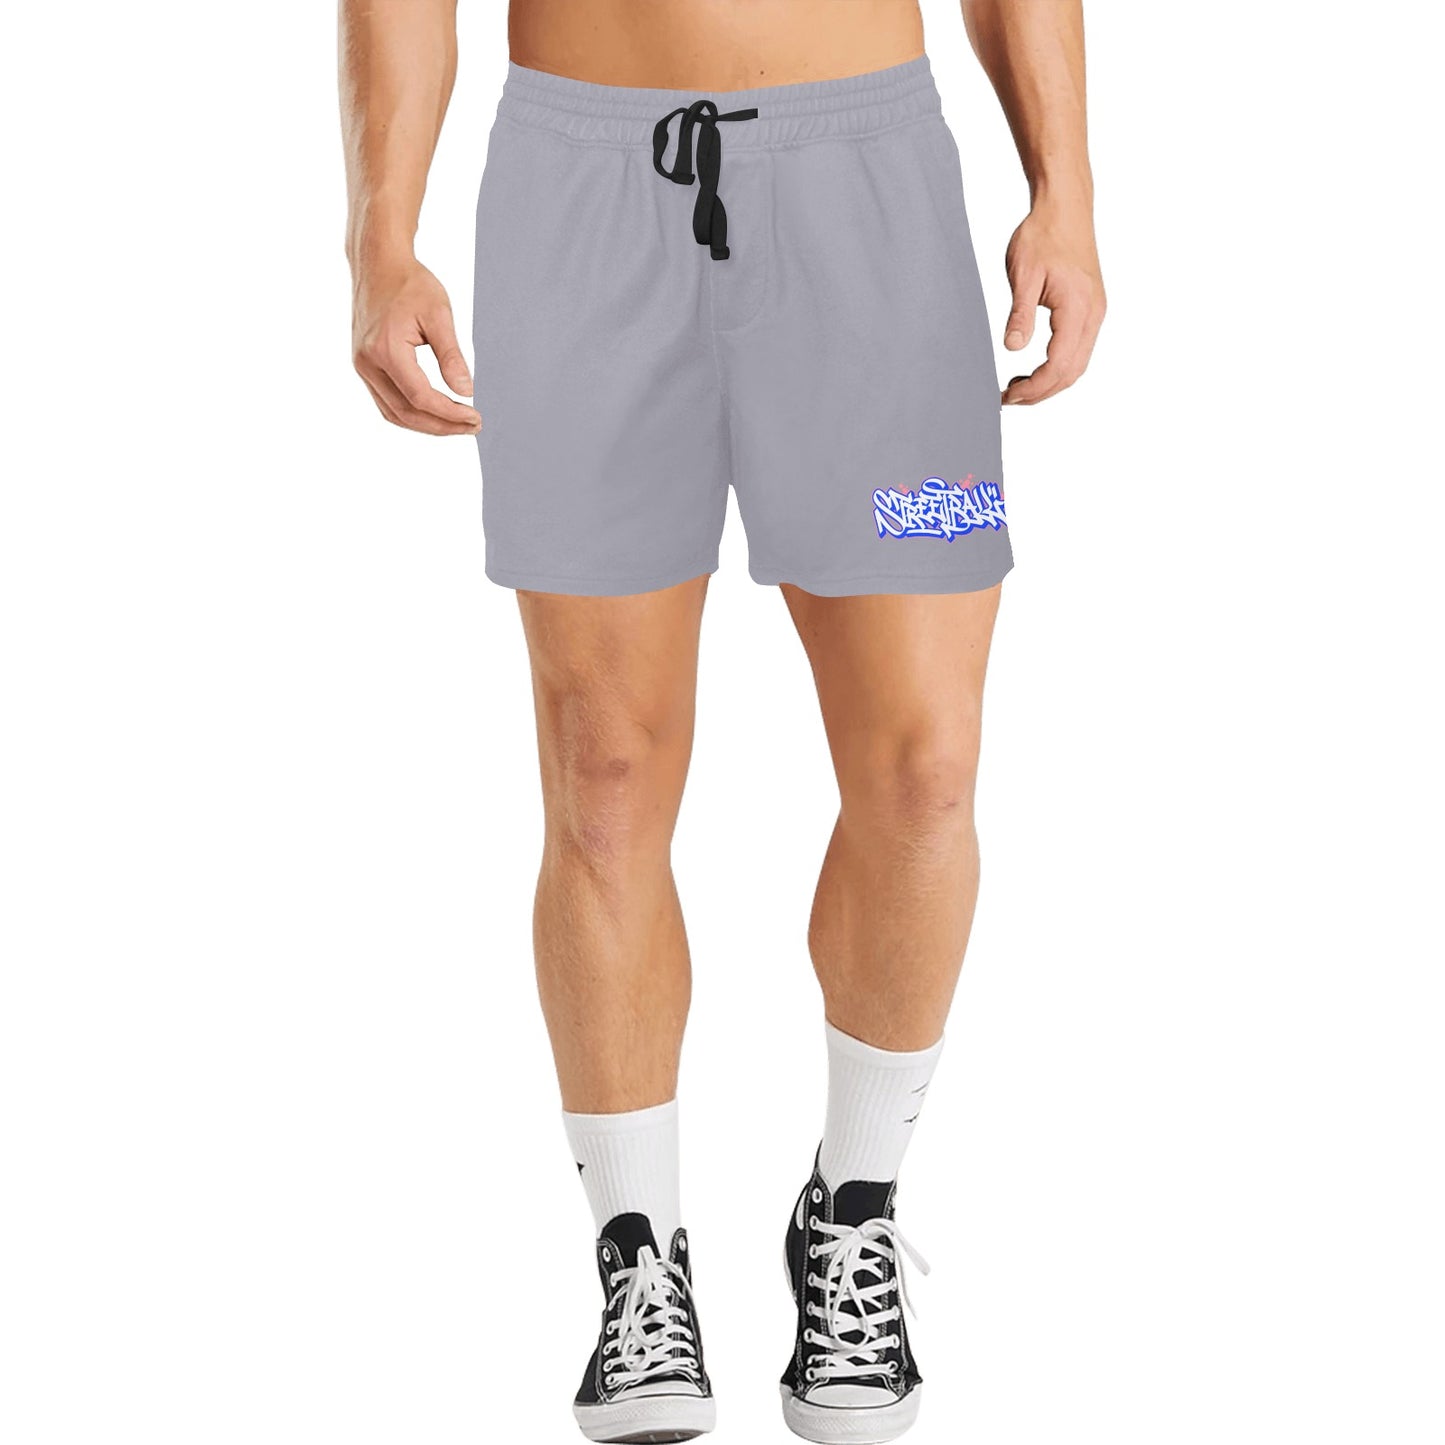 Duntalk "Streetball" Mid-Length Shorts Grey